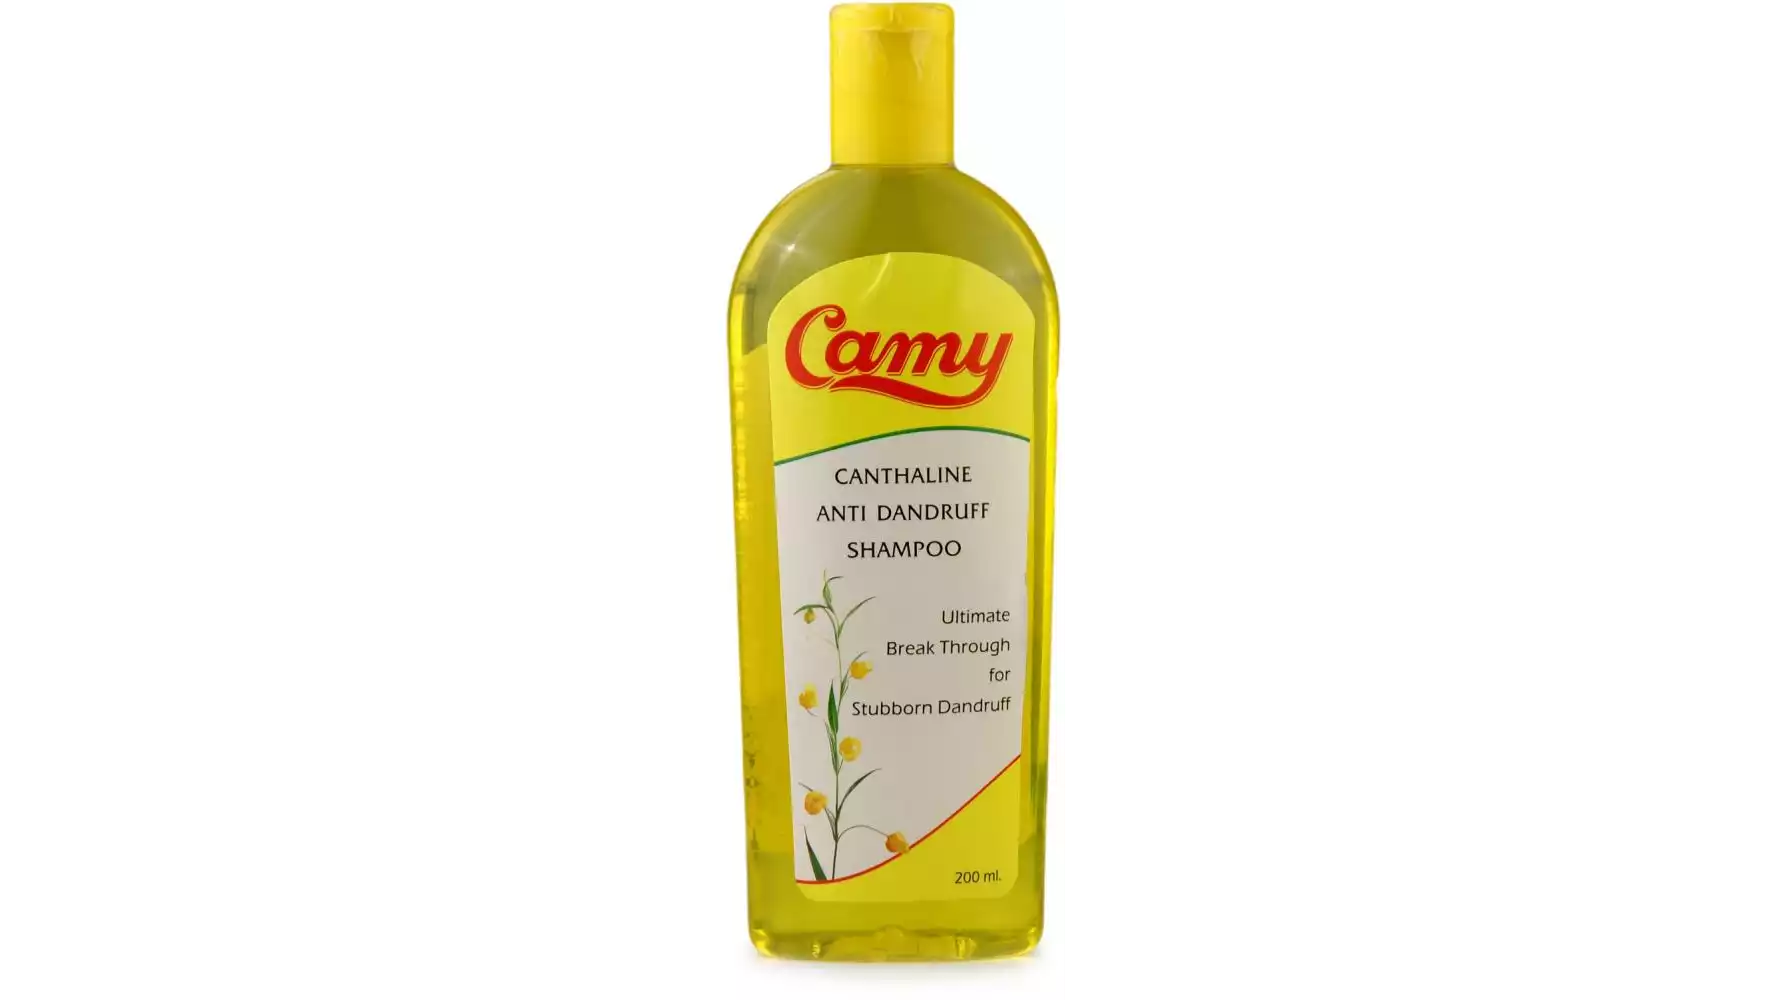 Lords Camy Canthalin Shampoo (200ml)